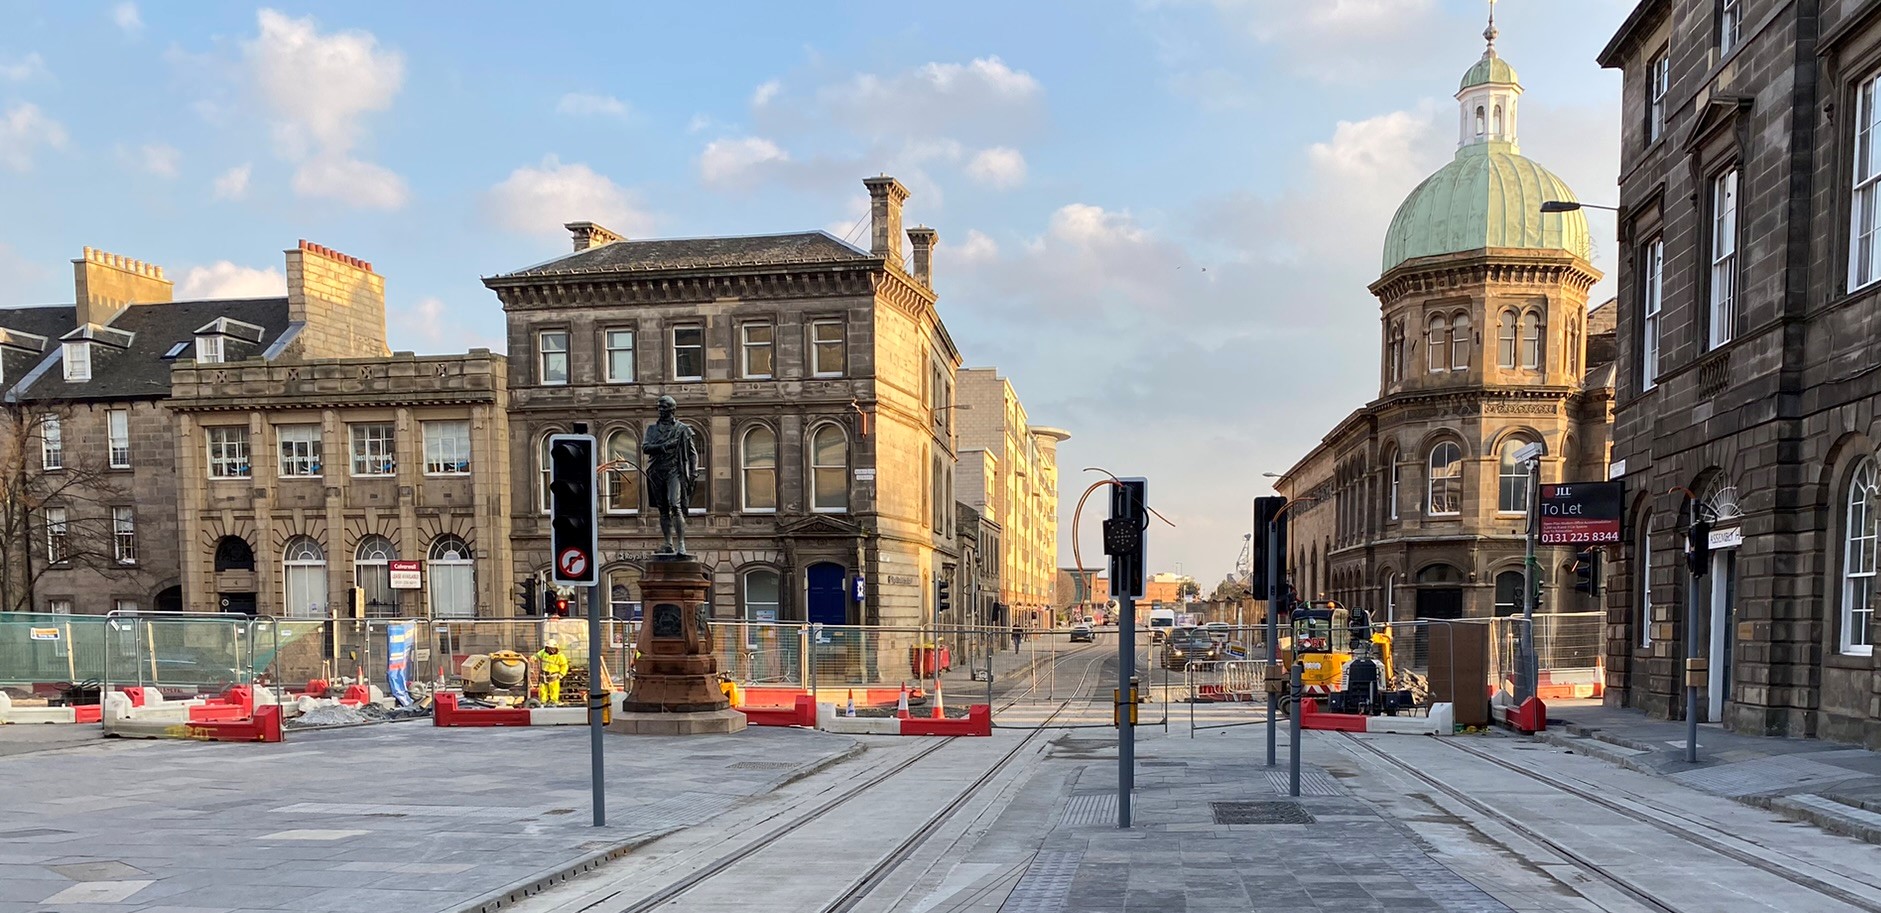 View of the Constitution Street / Bernard Street junction with the Robert Burns statue